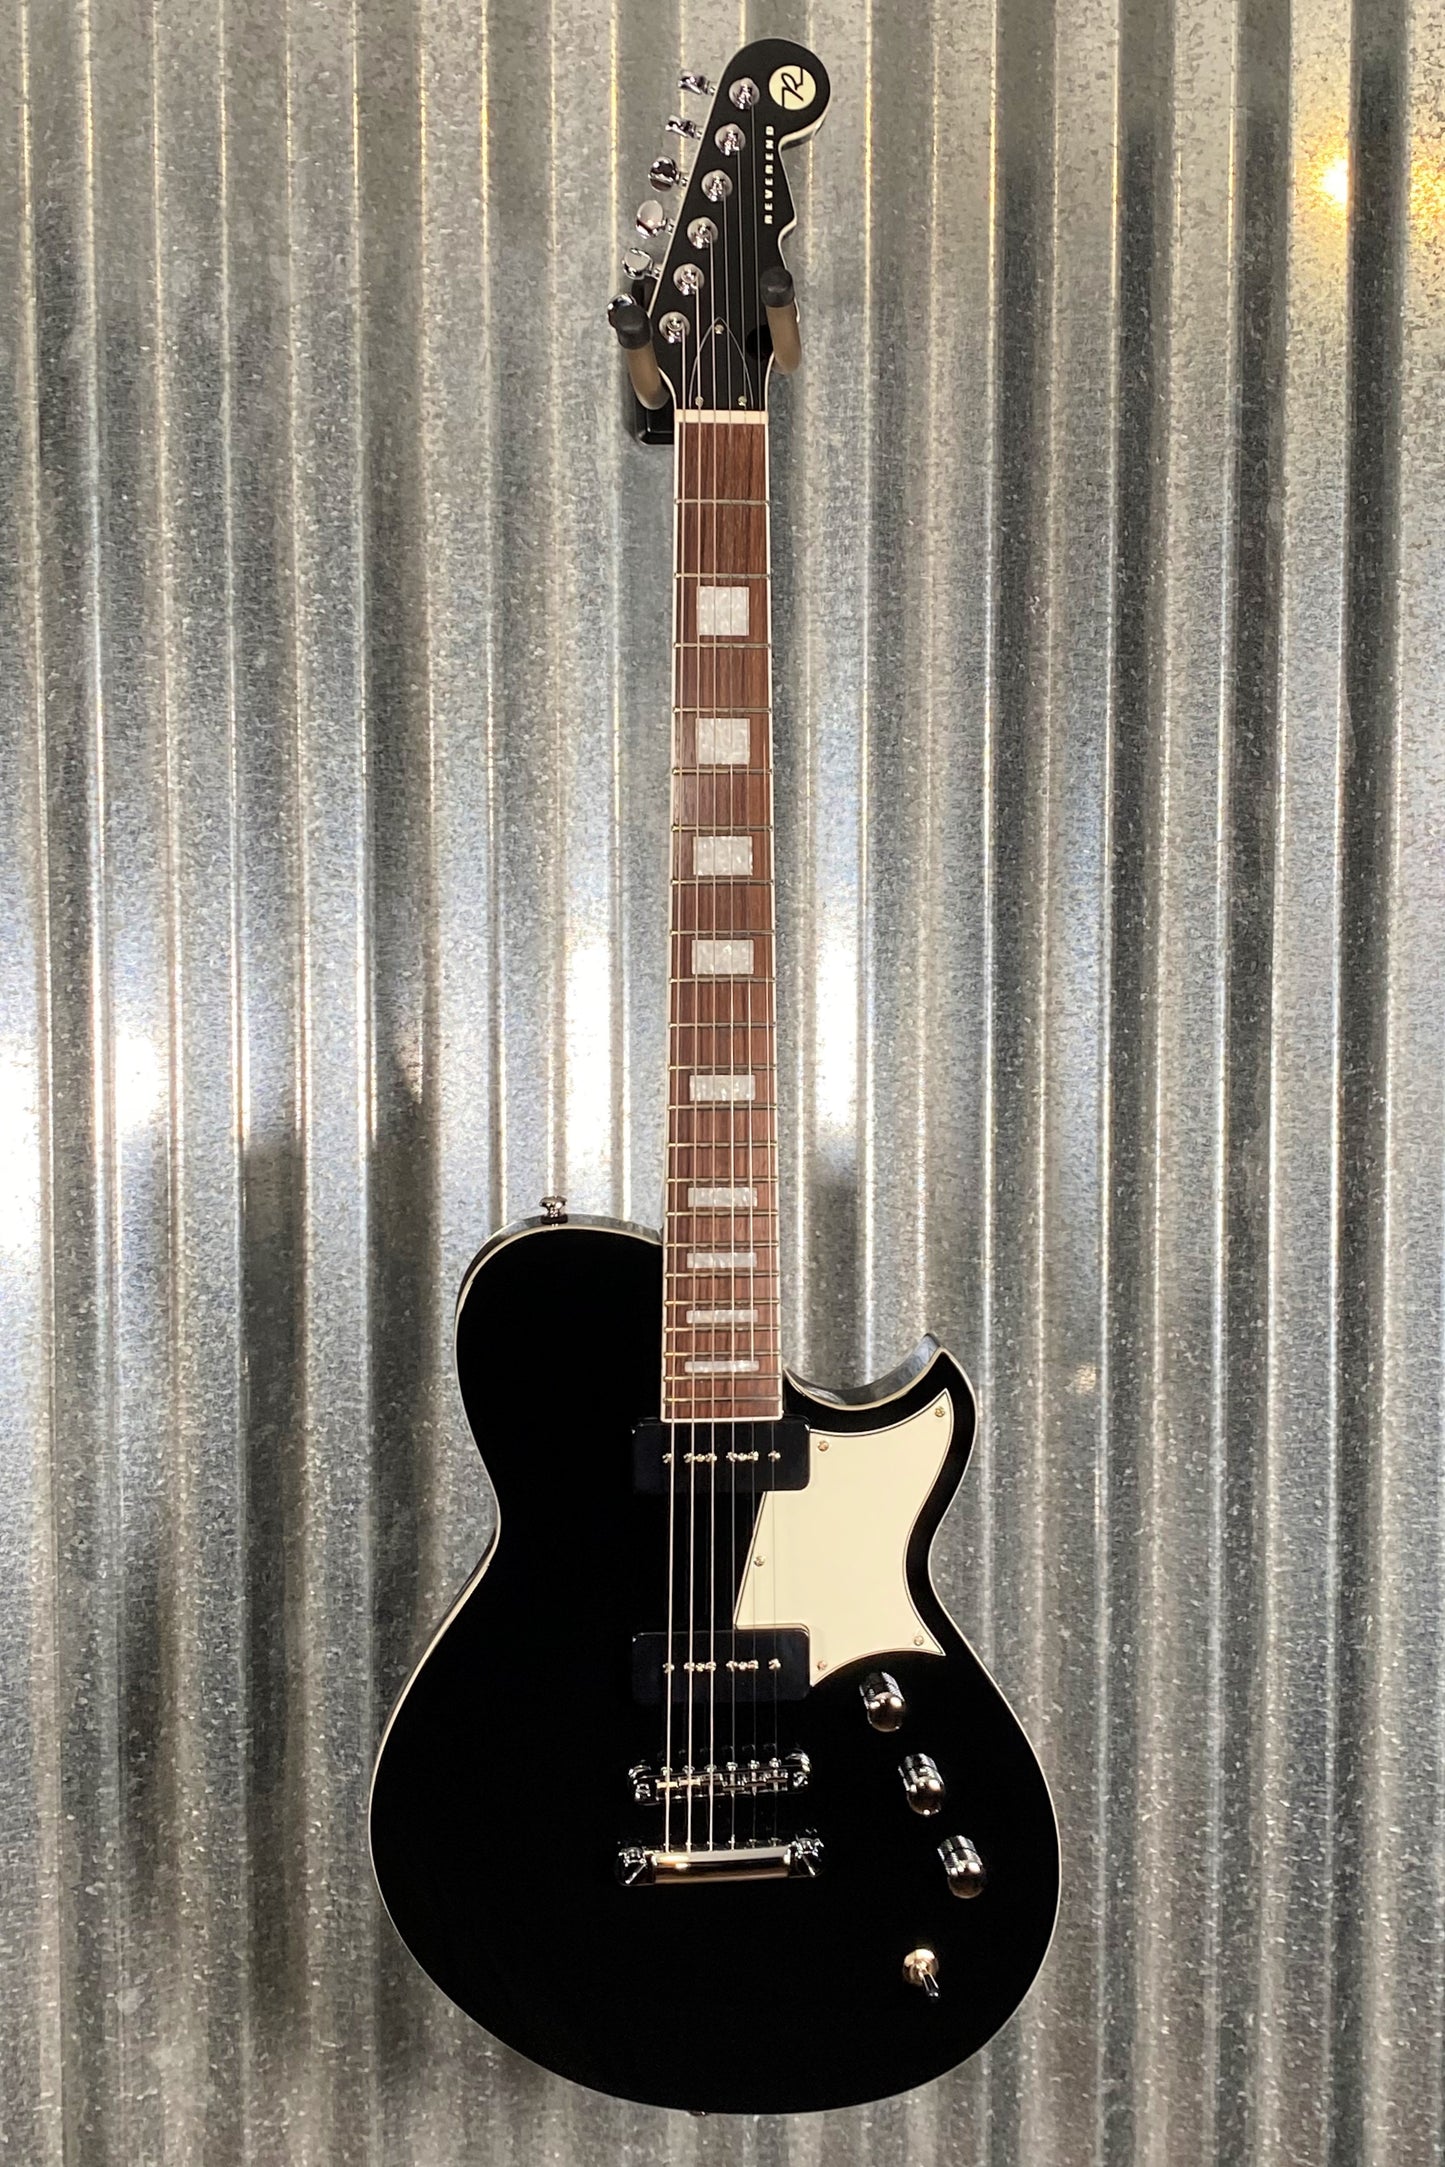 Reverend Guitars Contender 290 Midnight Black Guitar #1386